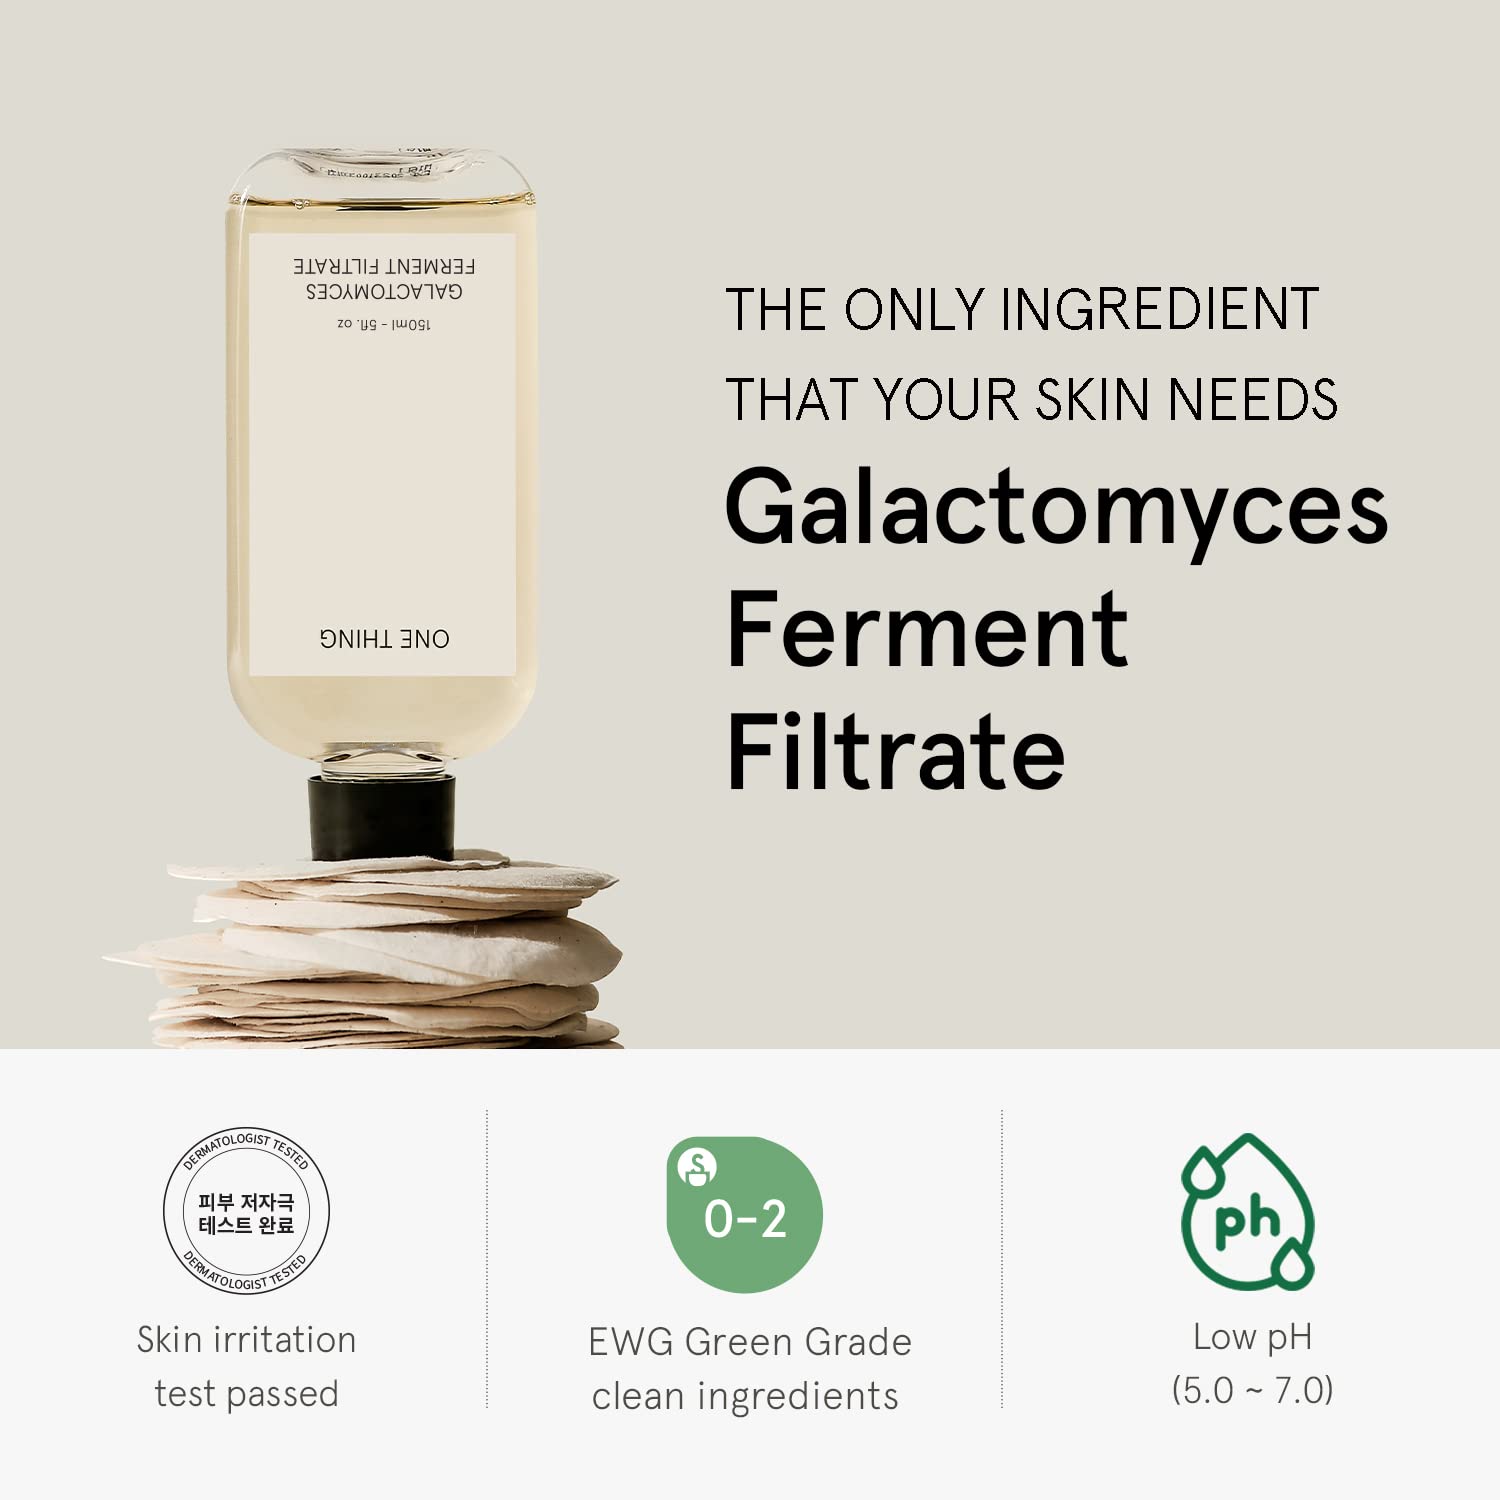 ONE THING Galaktomyces Ferment Filtrat 150 ml